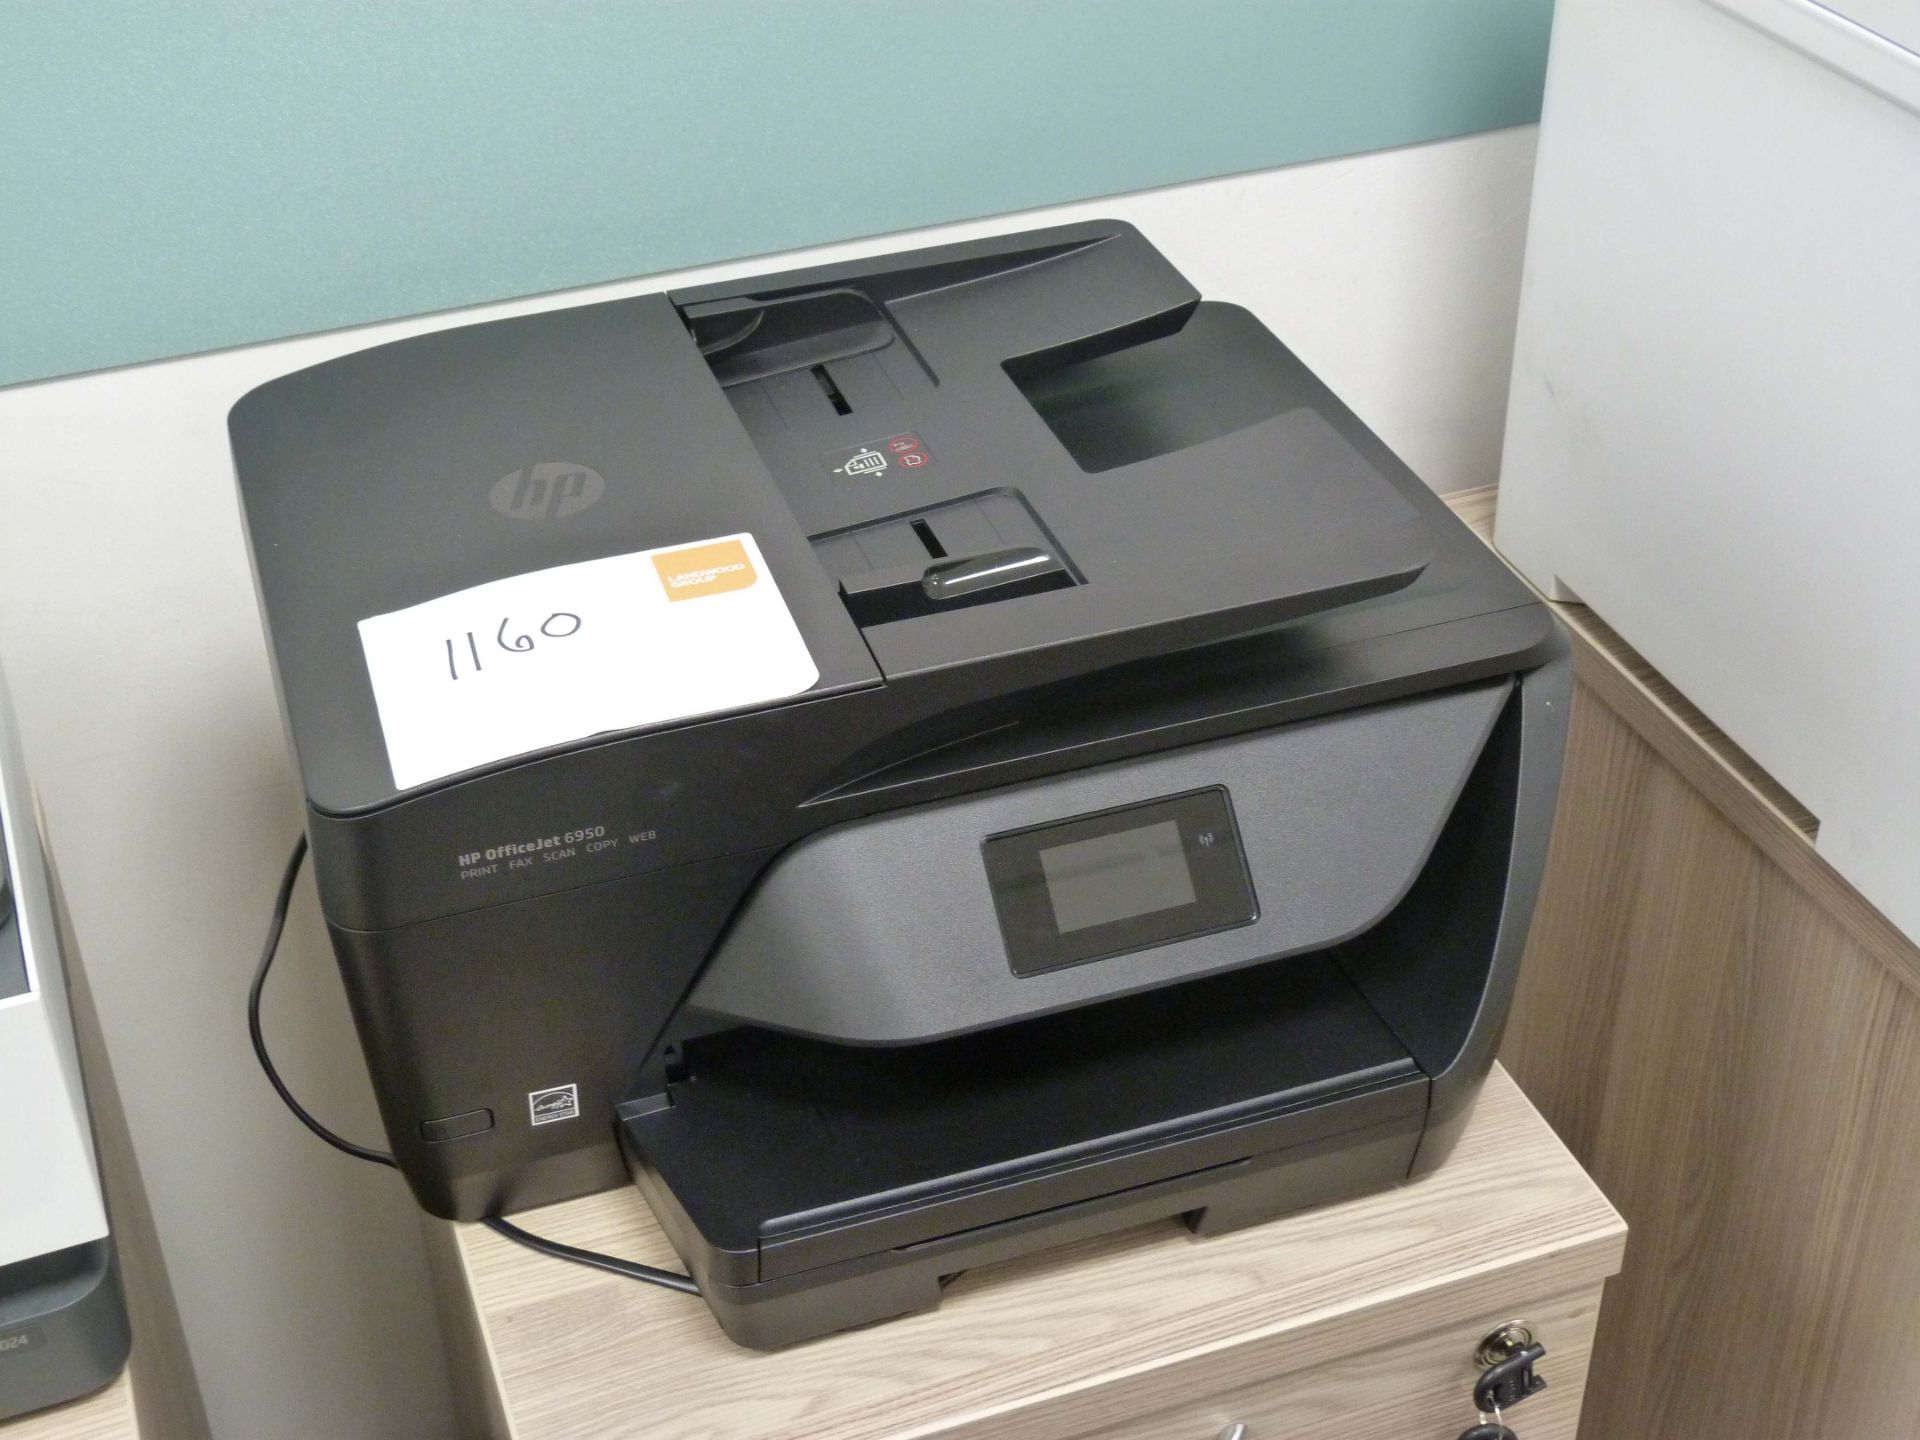 A HP OfficeJet Pro 6950 Multi Function Printer.